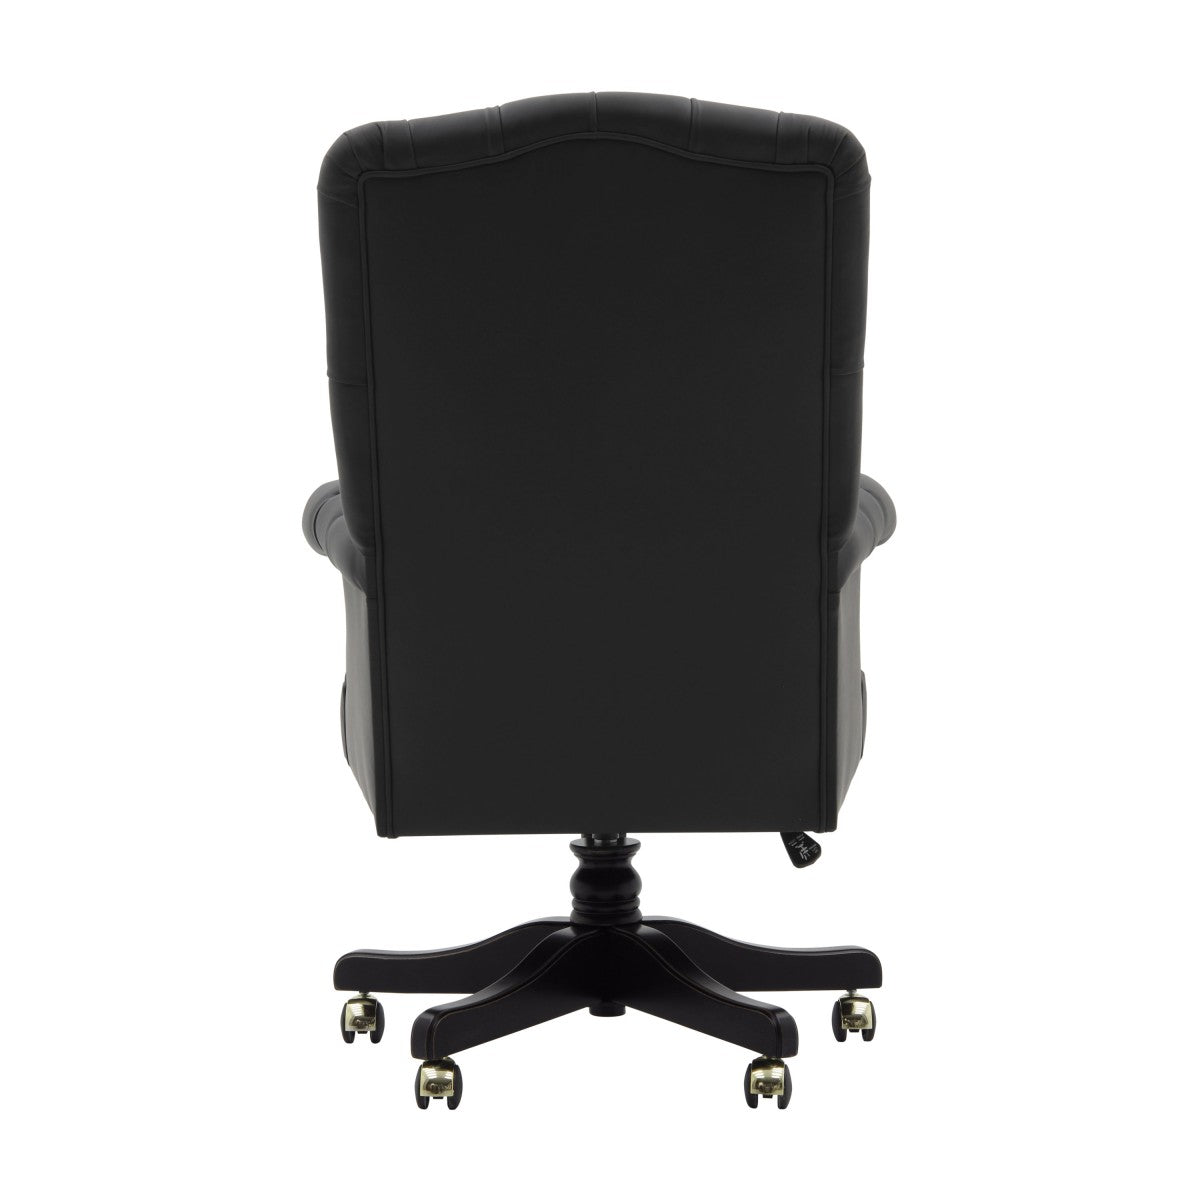 President Bespoke Upholstered Luxury Executive High Back Swivel Office Desk Chair MS105P Custom Made To Order